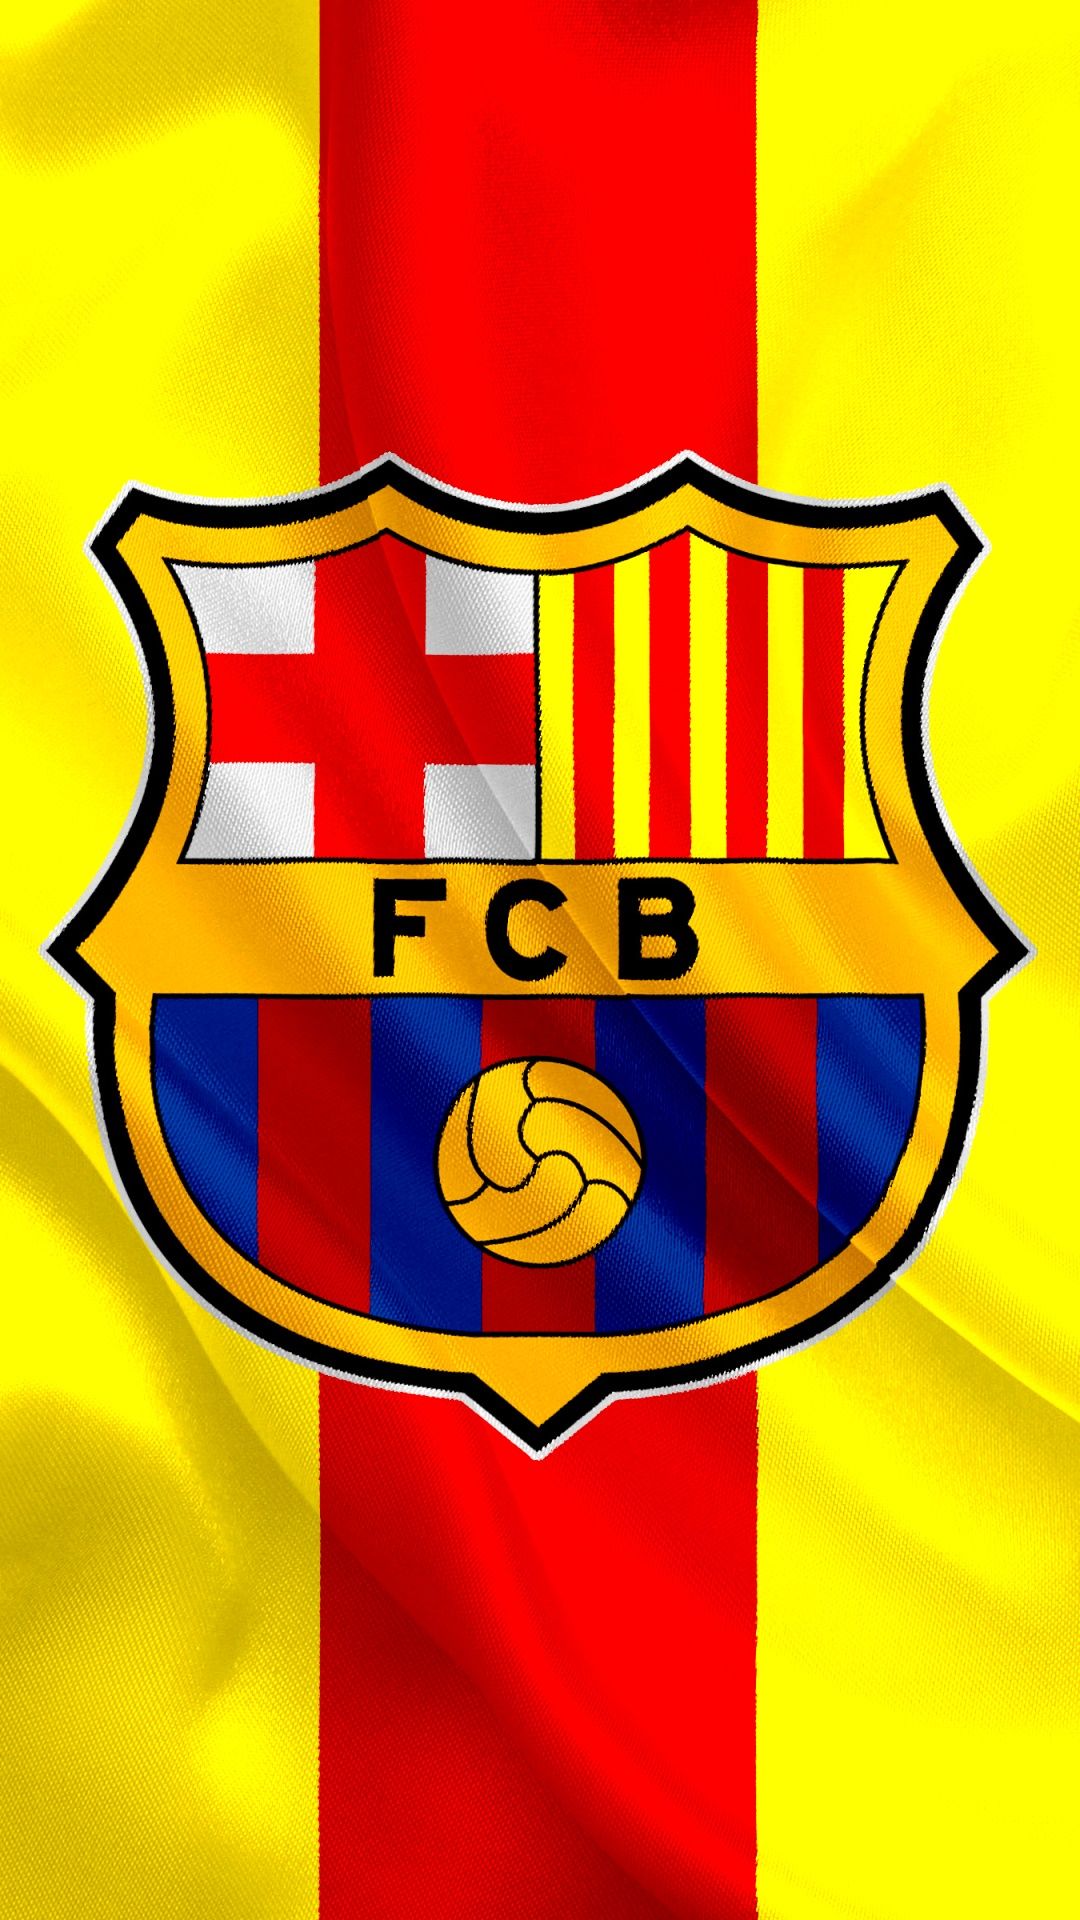  Barcelona Hintergrundbild 1080x1920. Wallpaper / Sports FC Barcelona Phone Wallpaper, Logo, Soccer, 1080x1920 free download